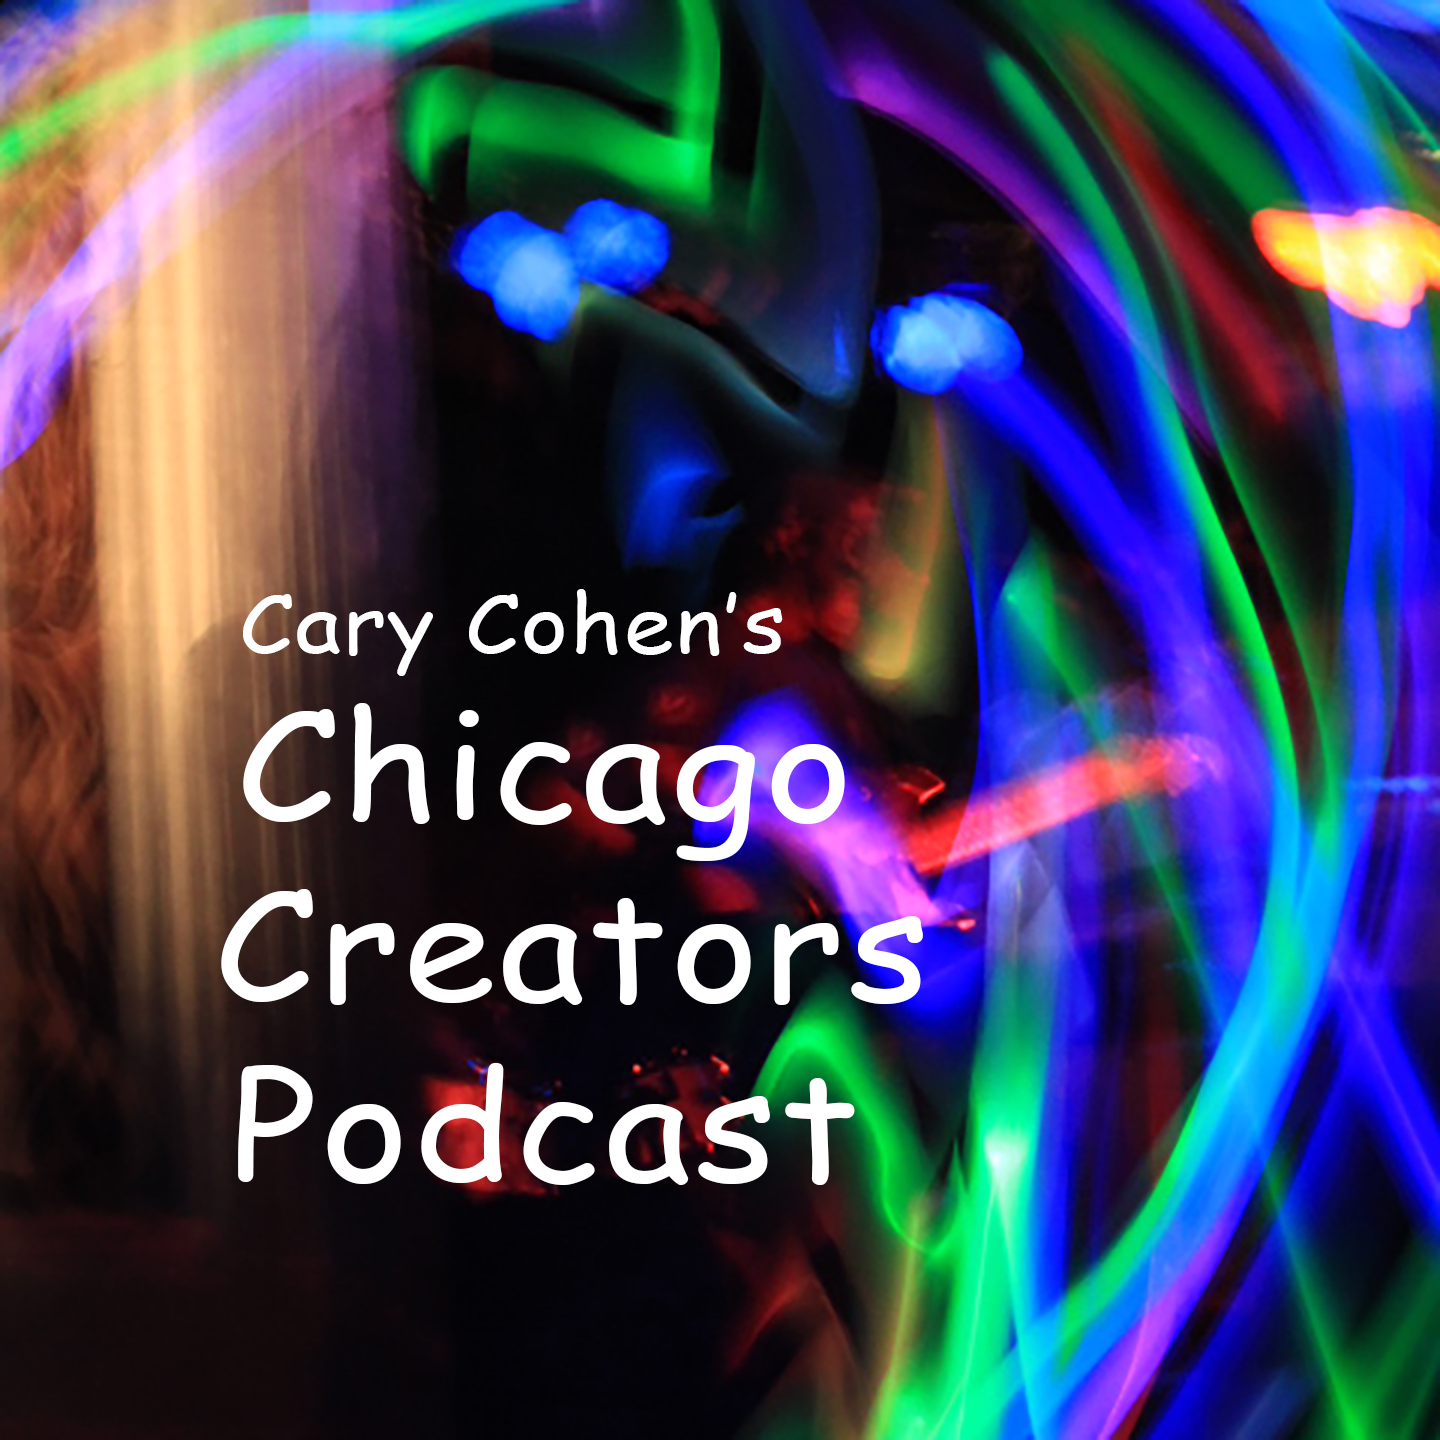 The Chicago Creators Podcast